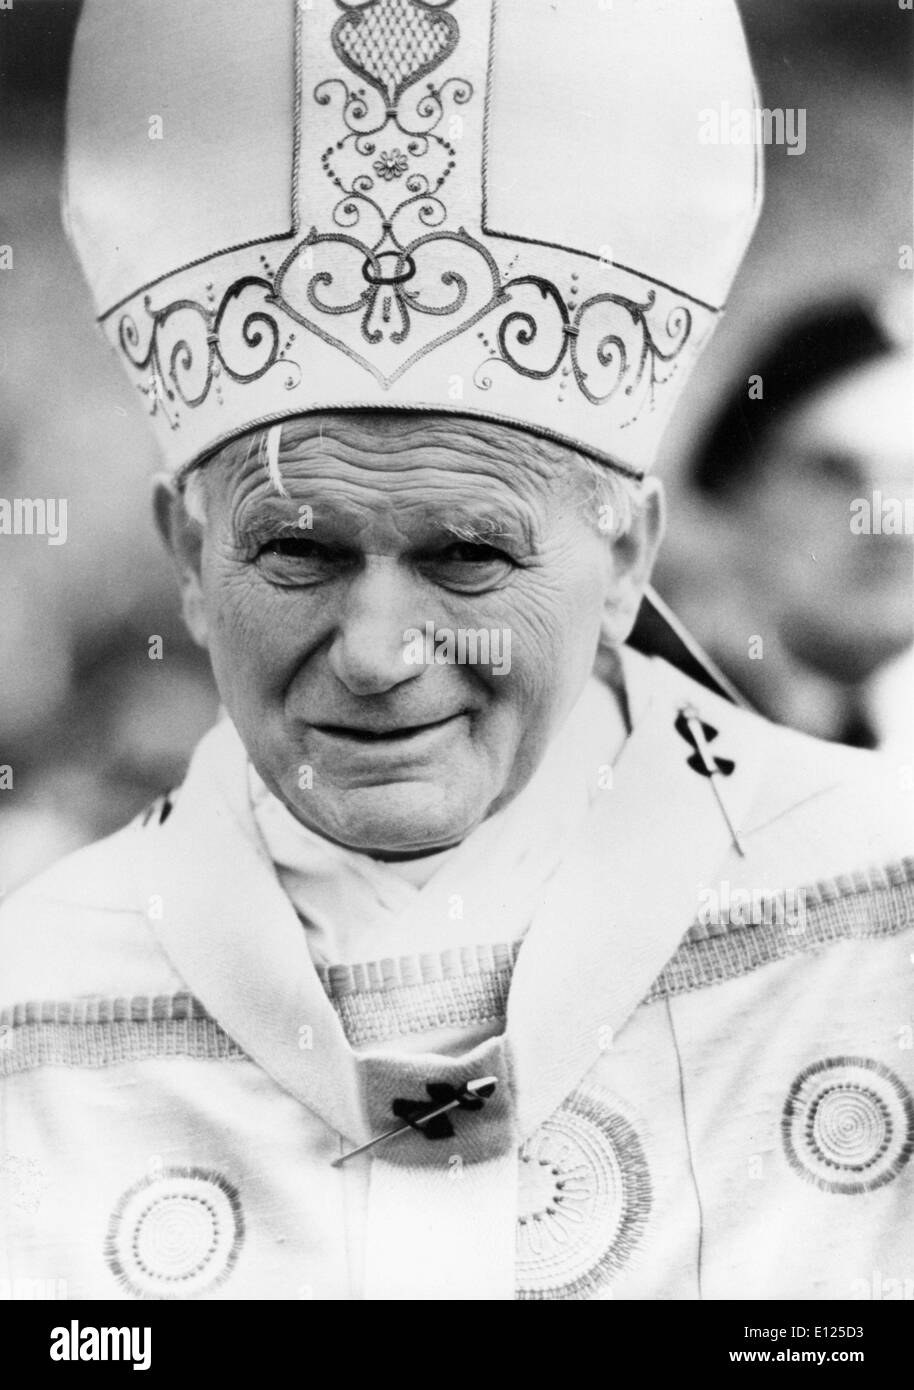 Papst Johannes Paul II aka Karol Wojtyla, arriving at Orly airport, Paris. Stock Photo